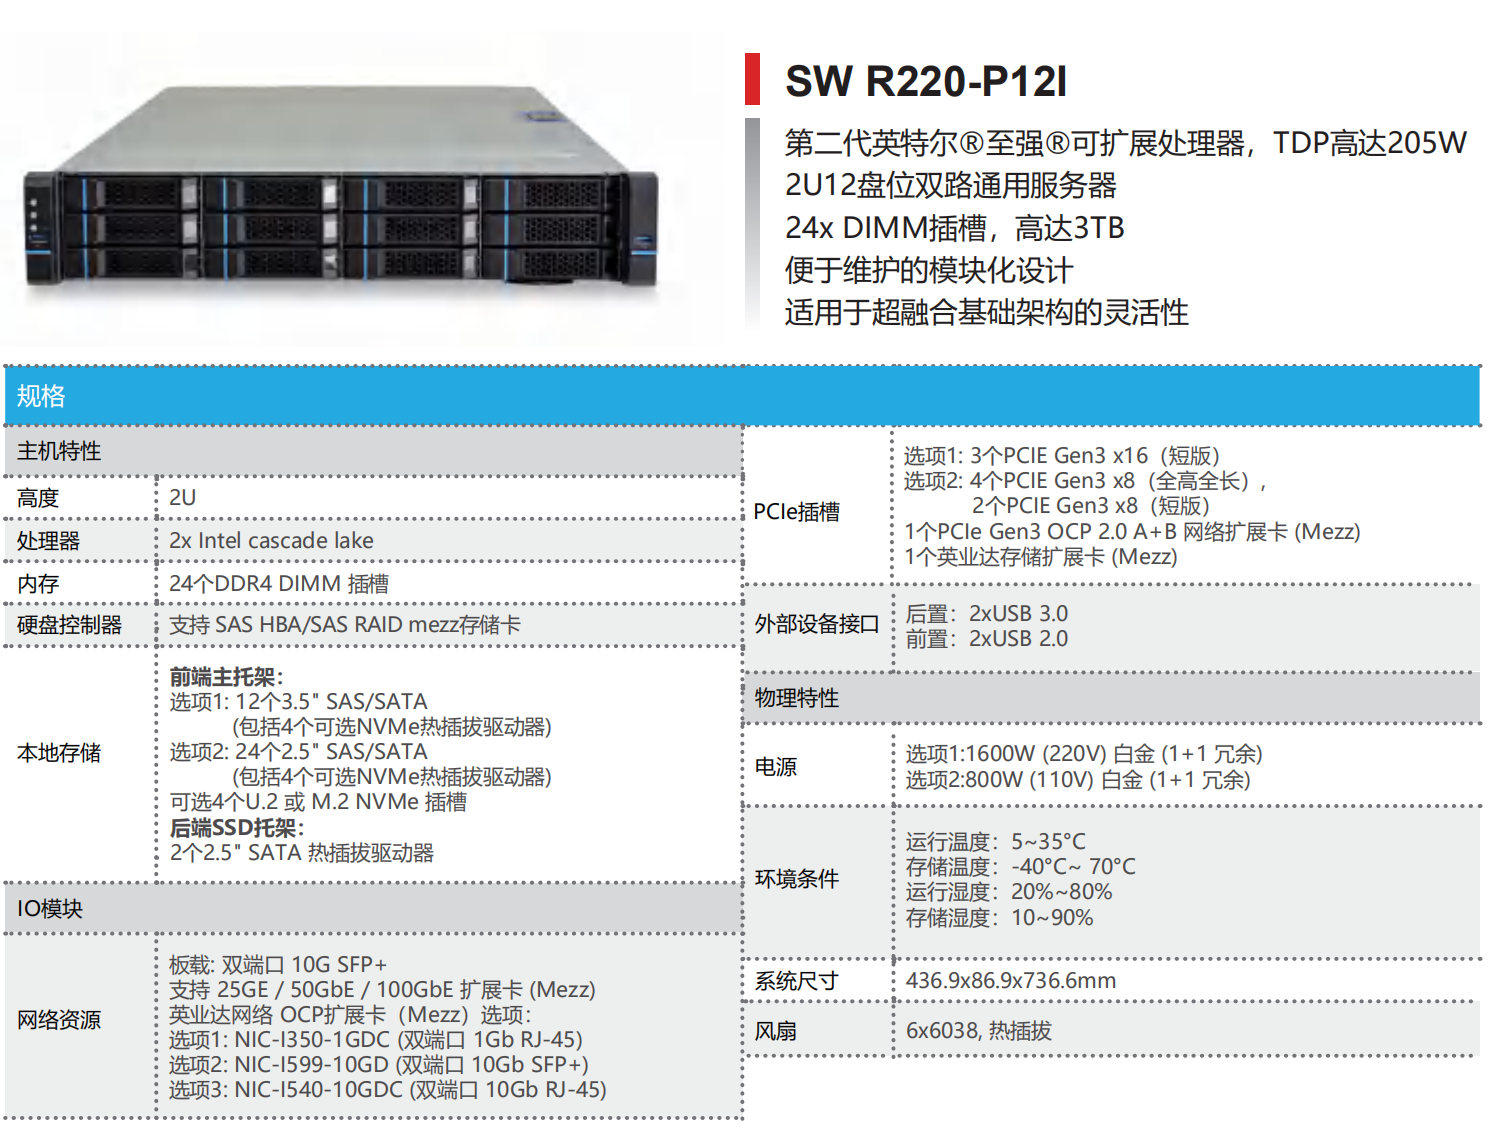 INTEL 平台双路服务器—SW R220-P12I(图1)